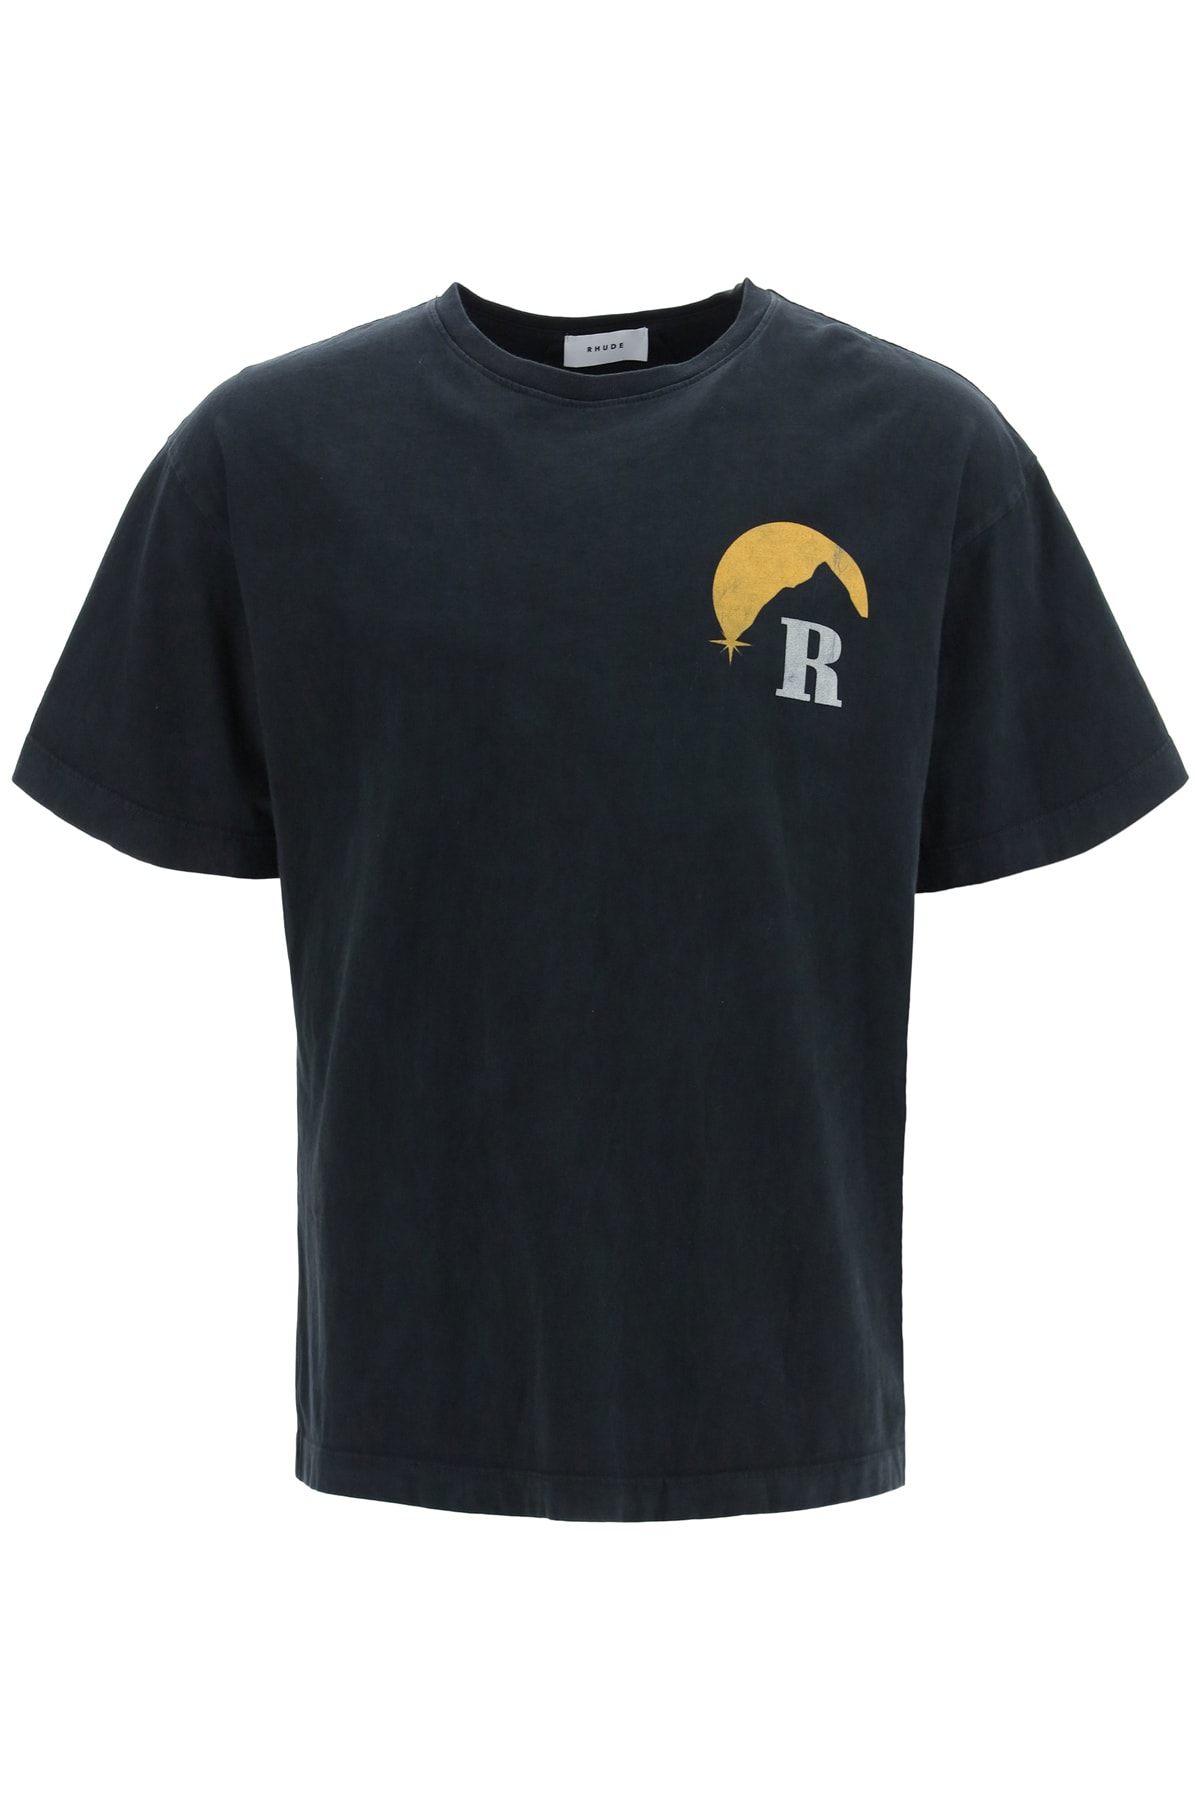 Rhude Moonlight T-shirt